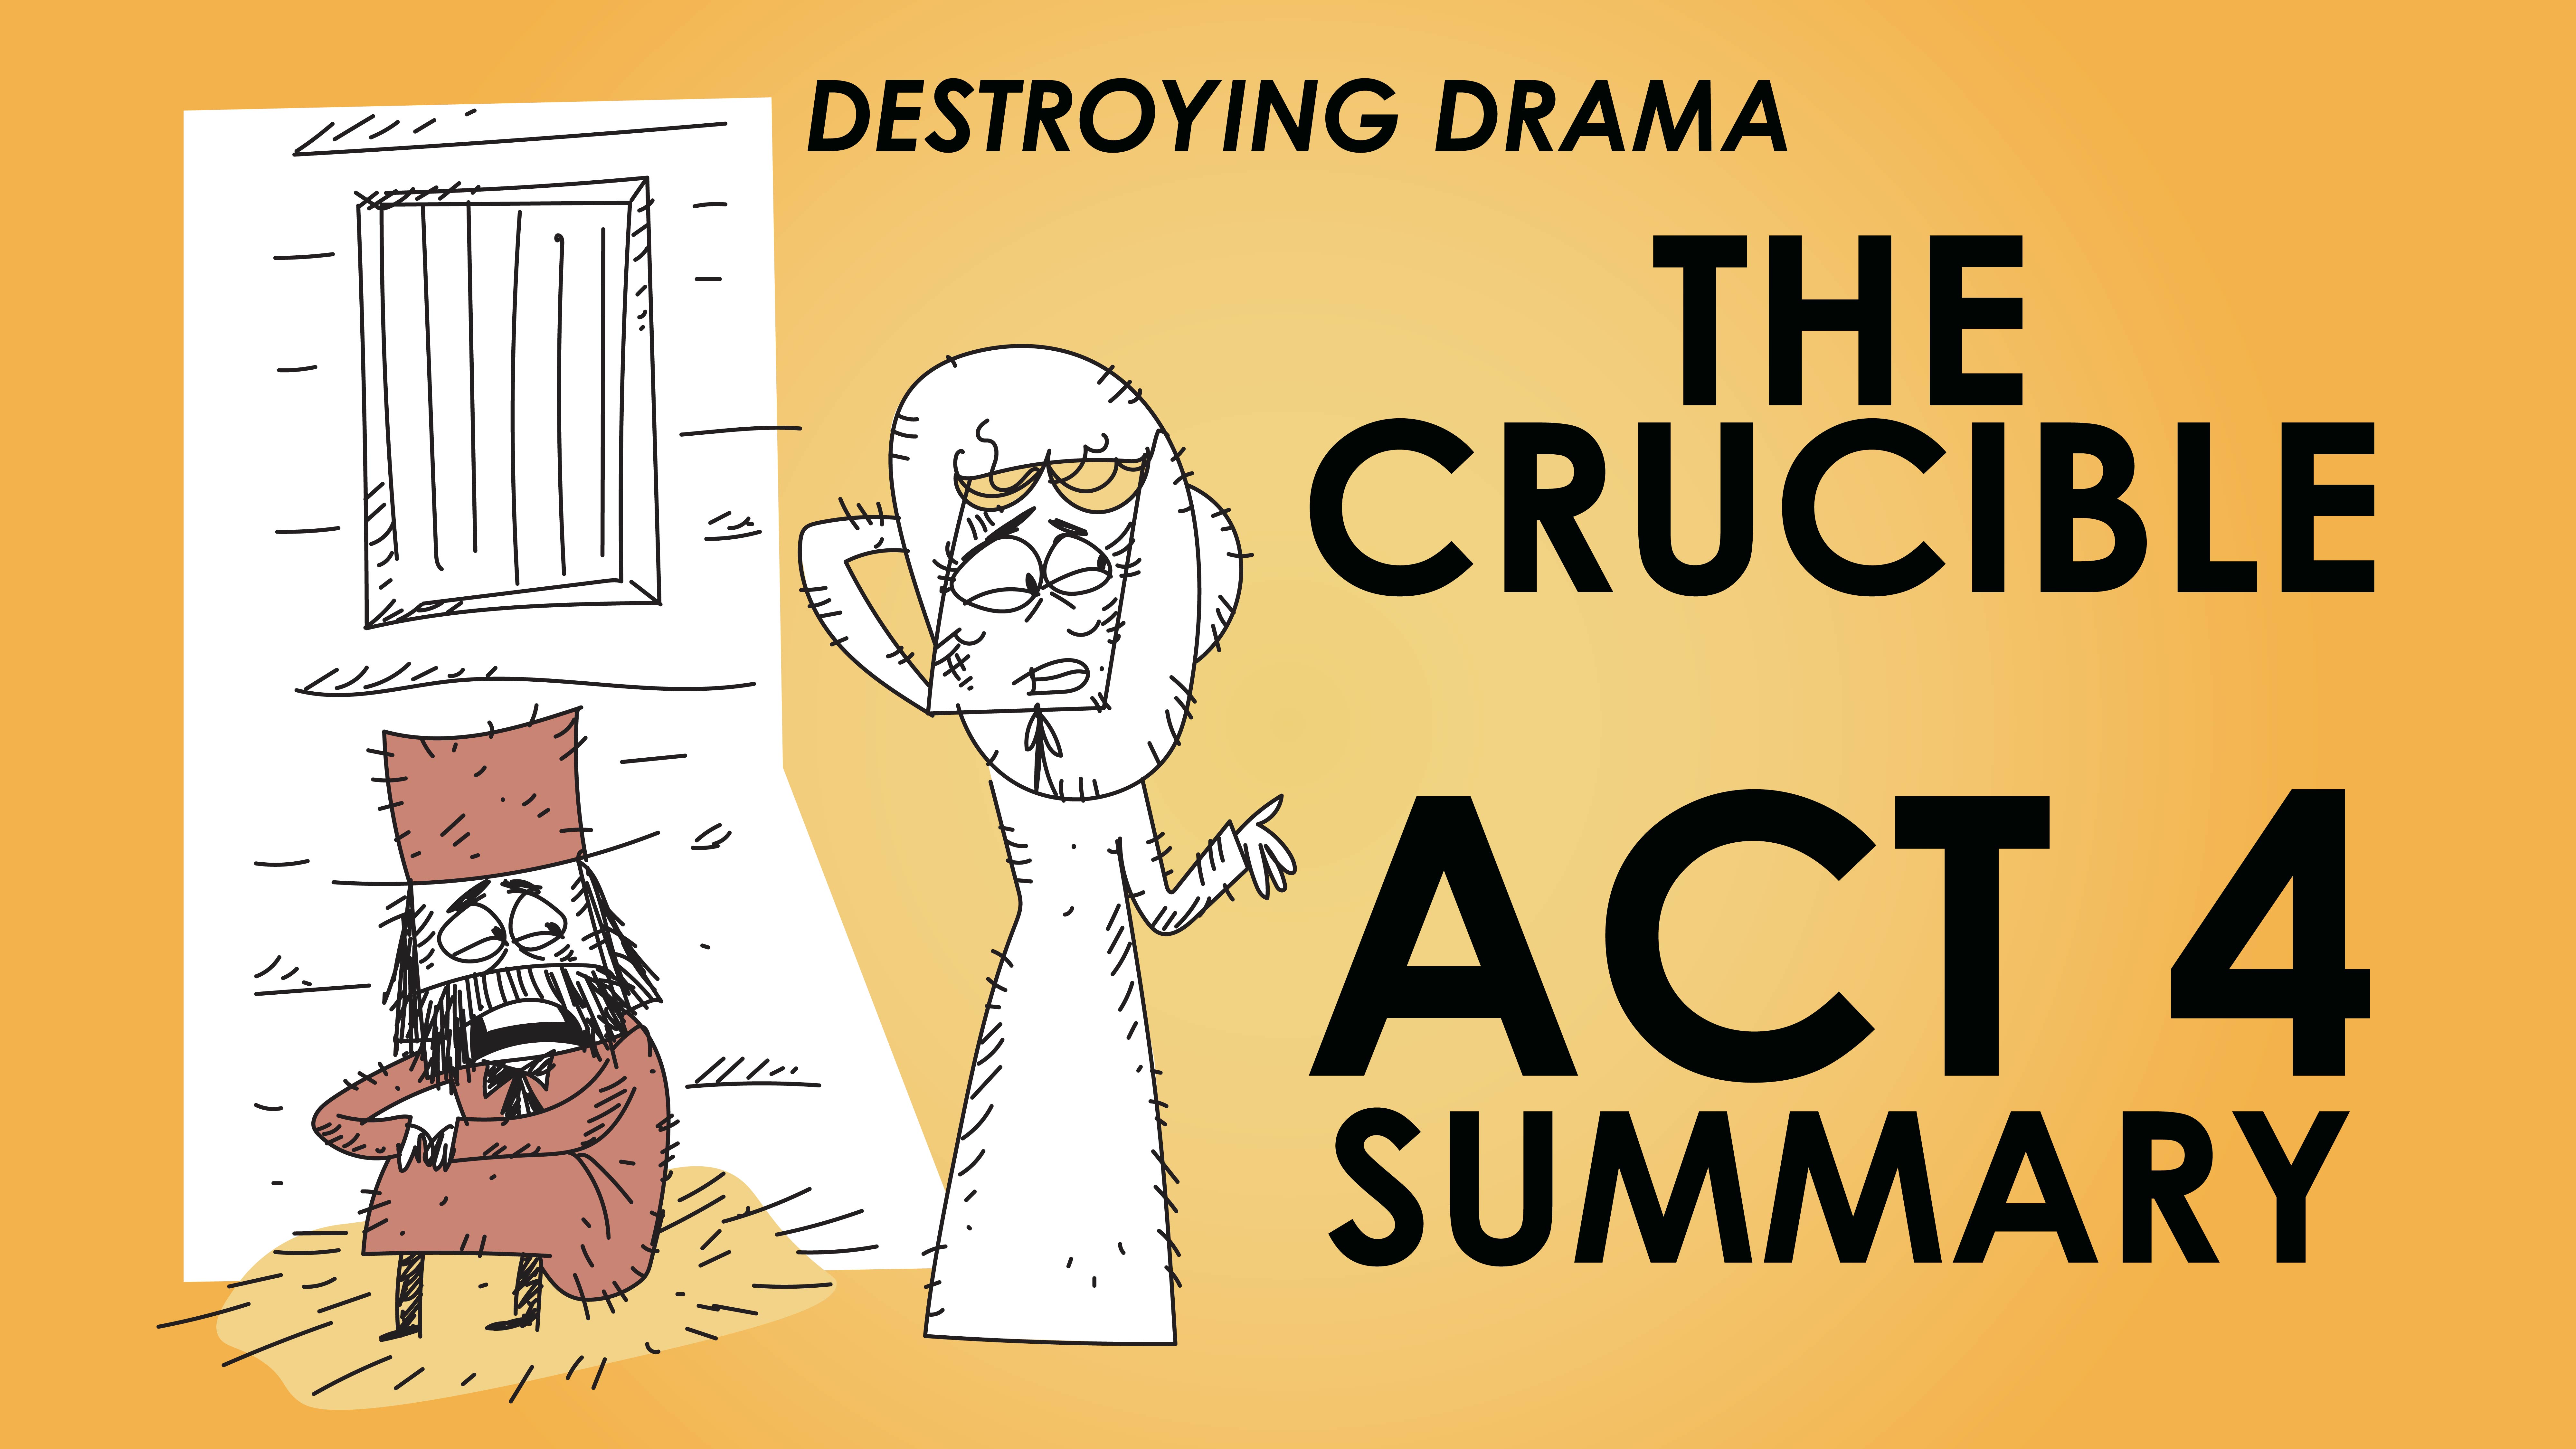 The Crucible - Arthur Miller - Act 4 Summary - Destroying Drama Series